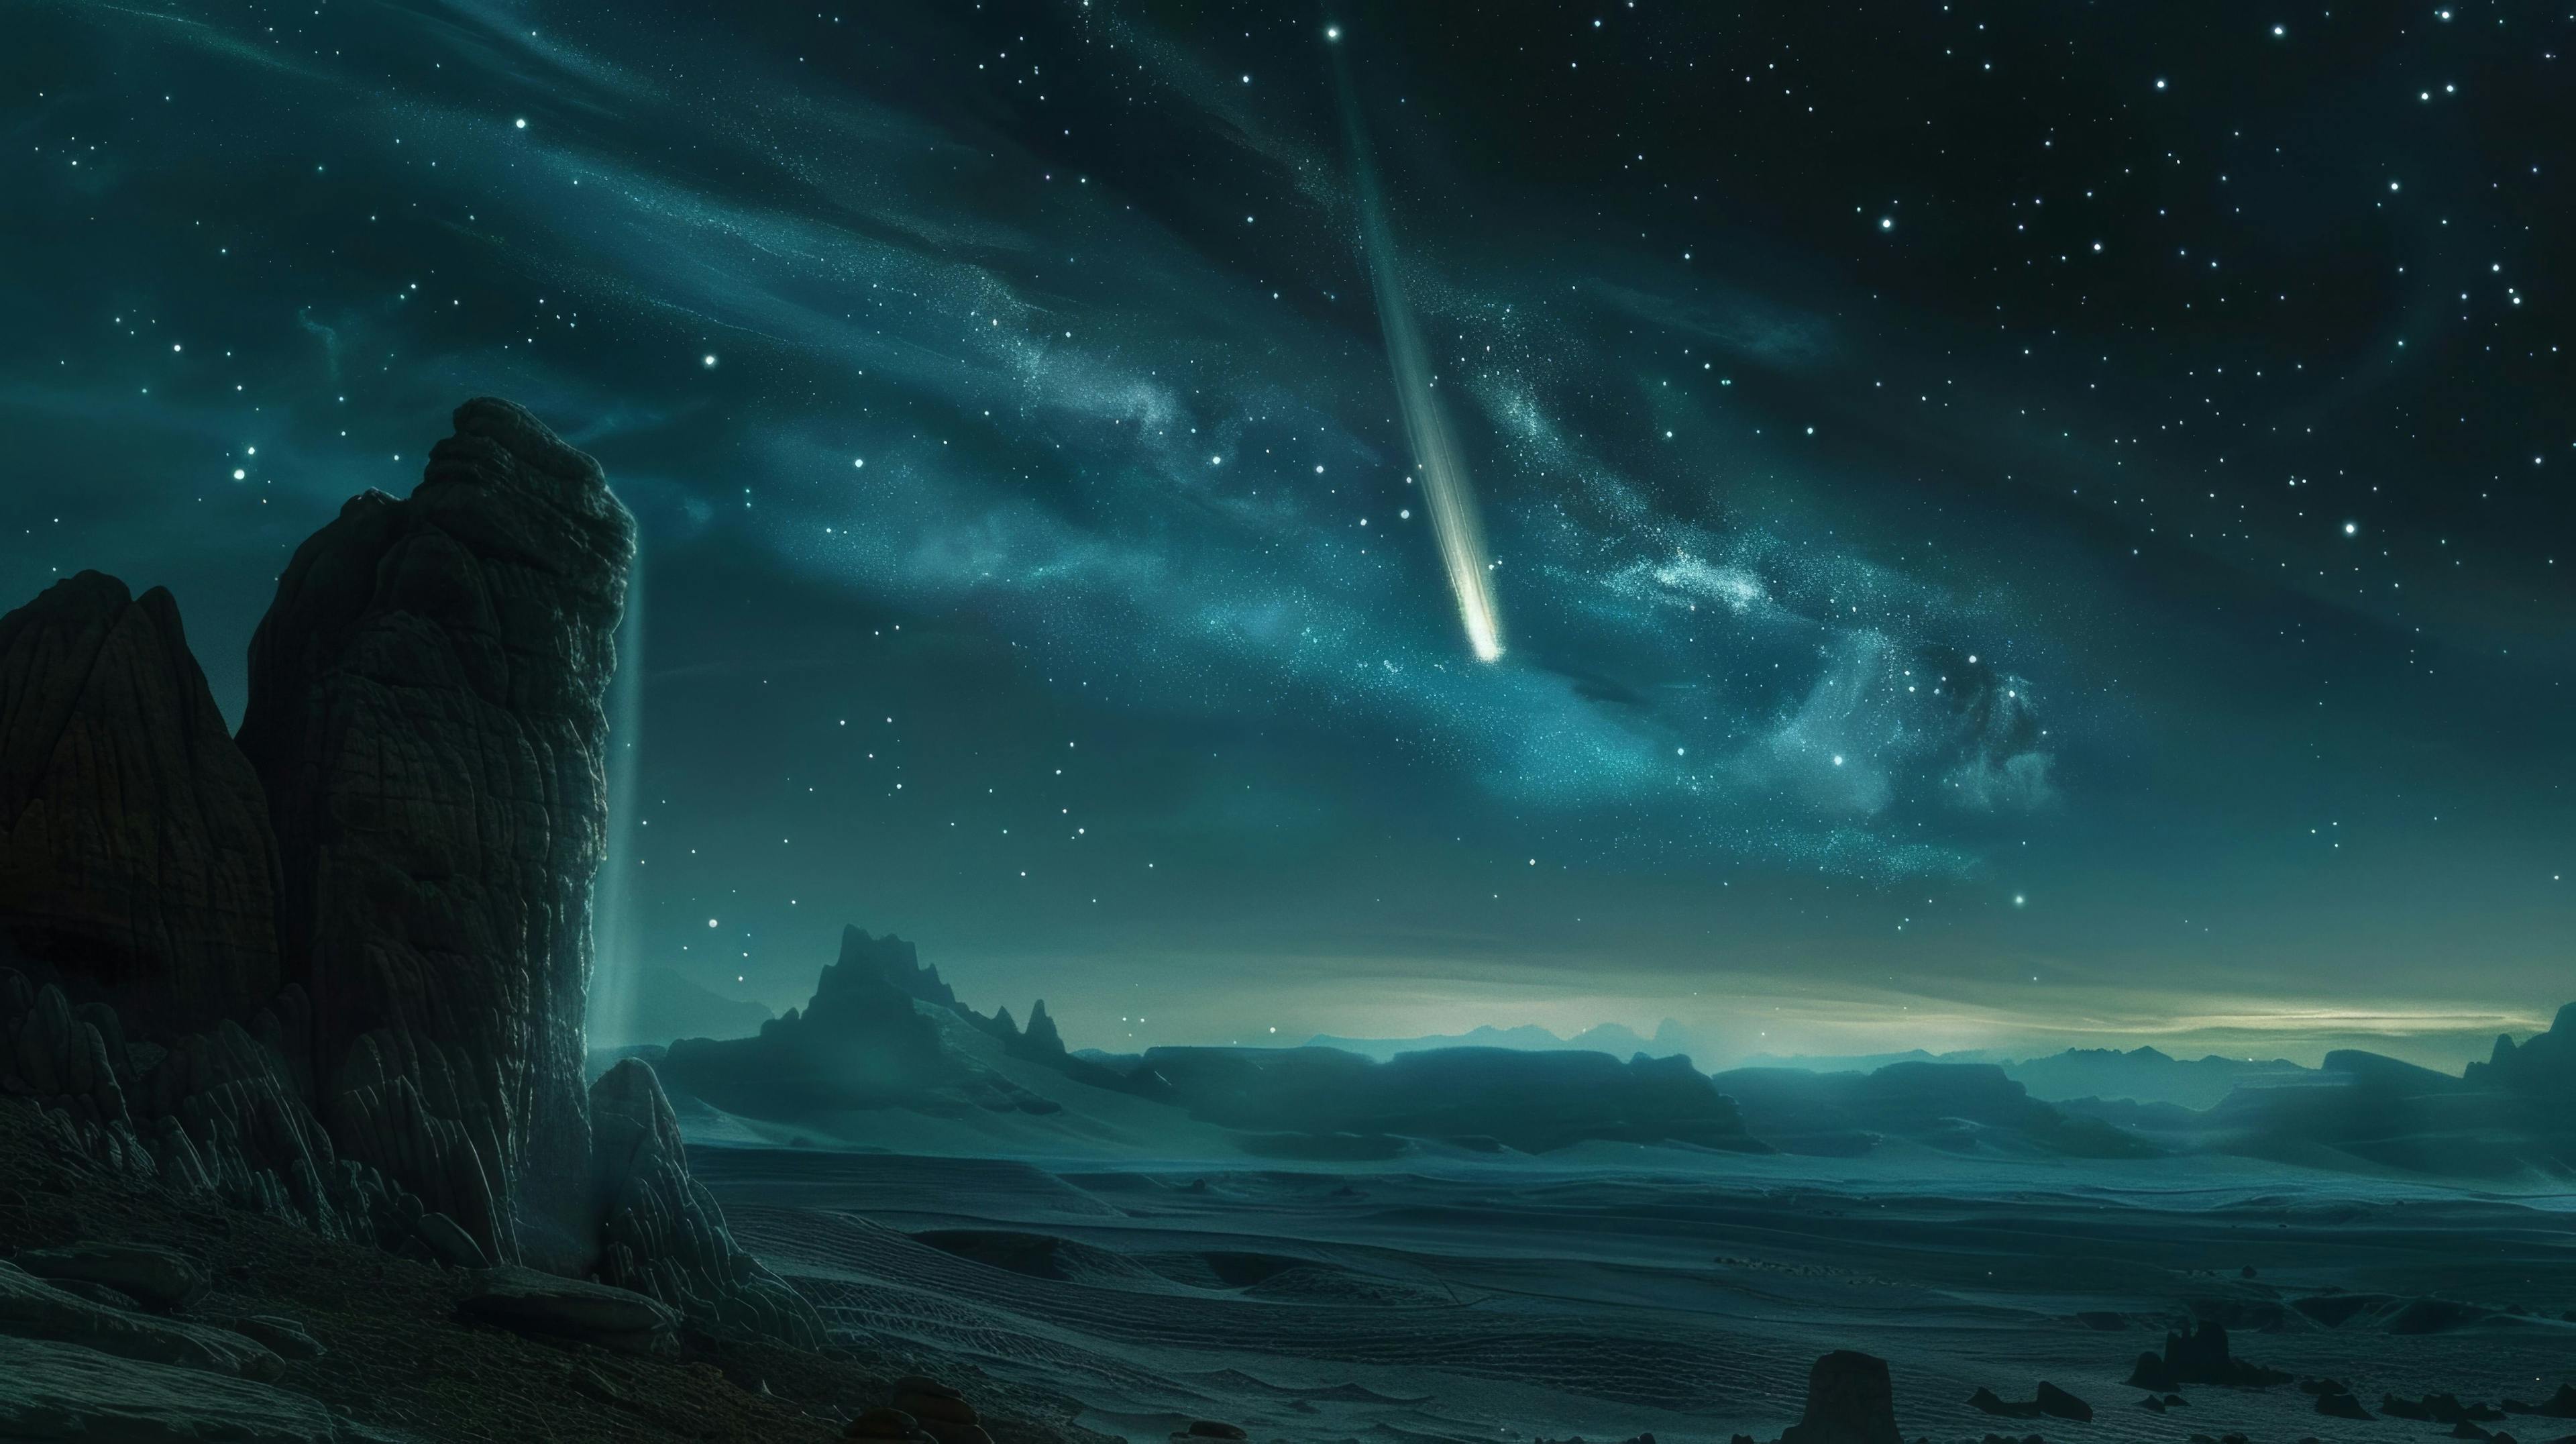 A breathtaking digital illustration of a comet streaking across a starry sky © tashechka - stock.adobe.com